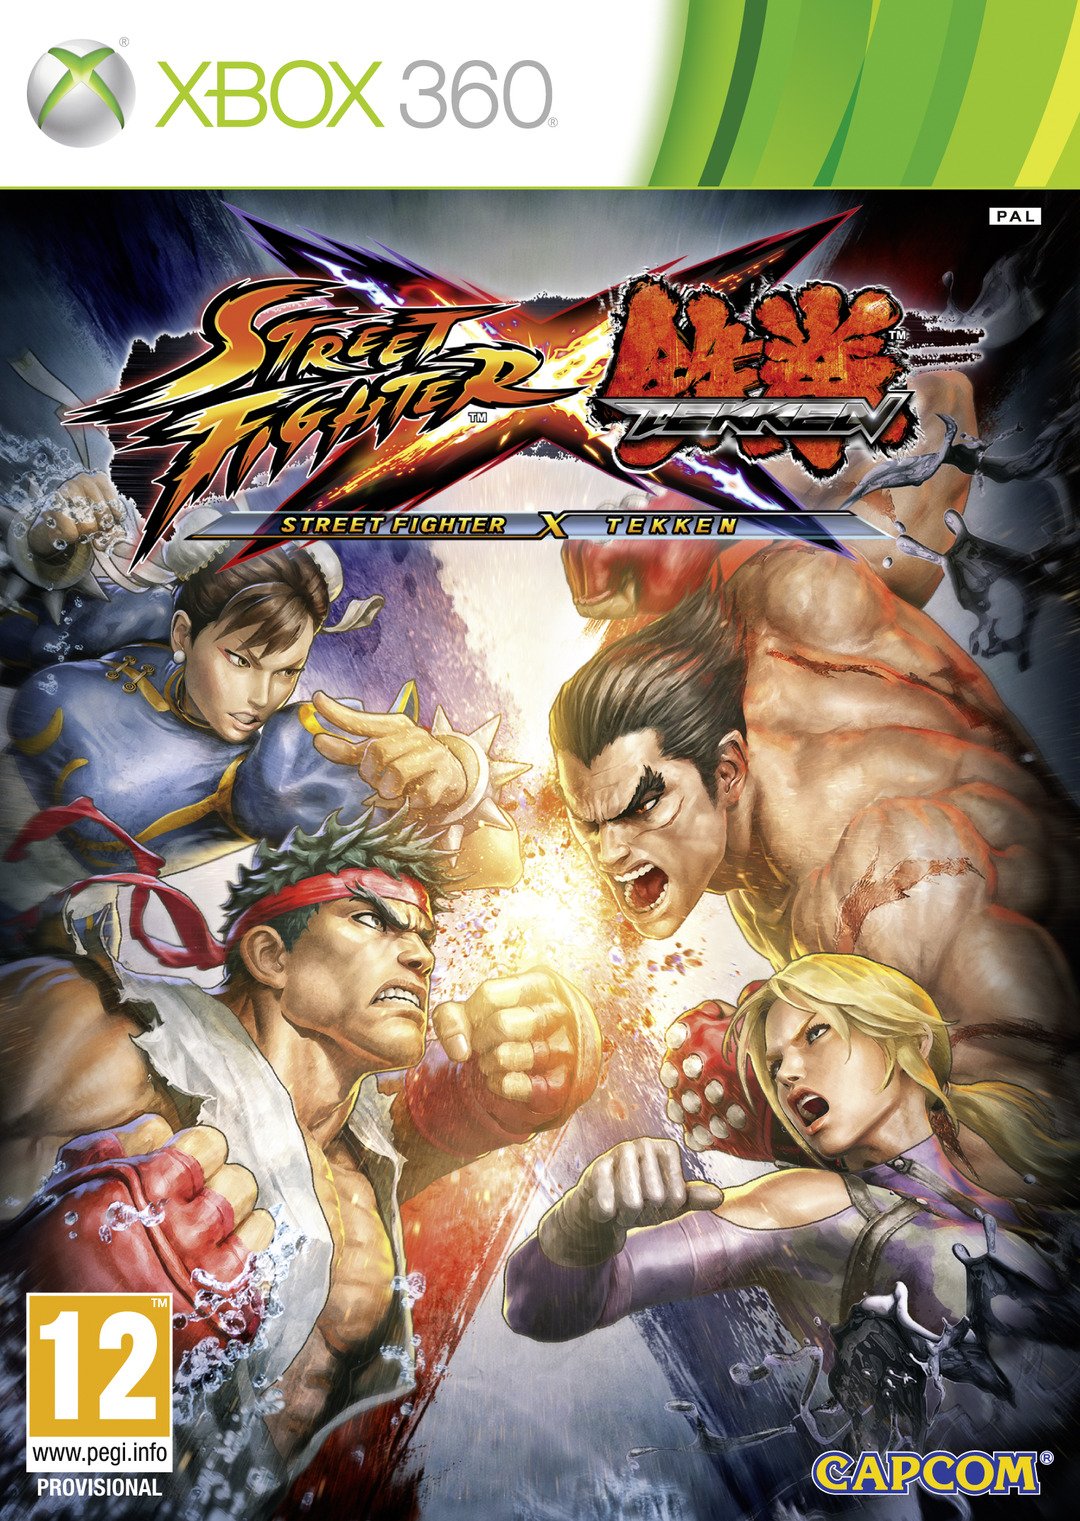  Street Fighter X Tekken [Xbox 360]  [DF]